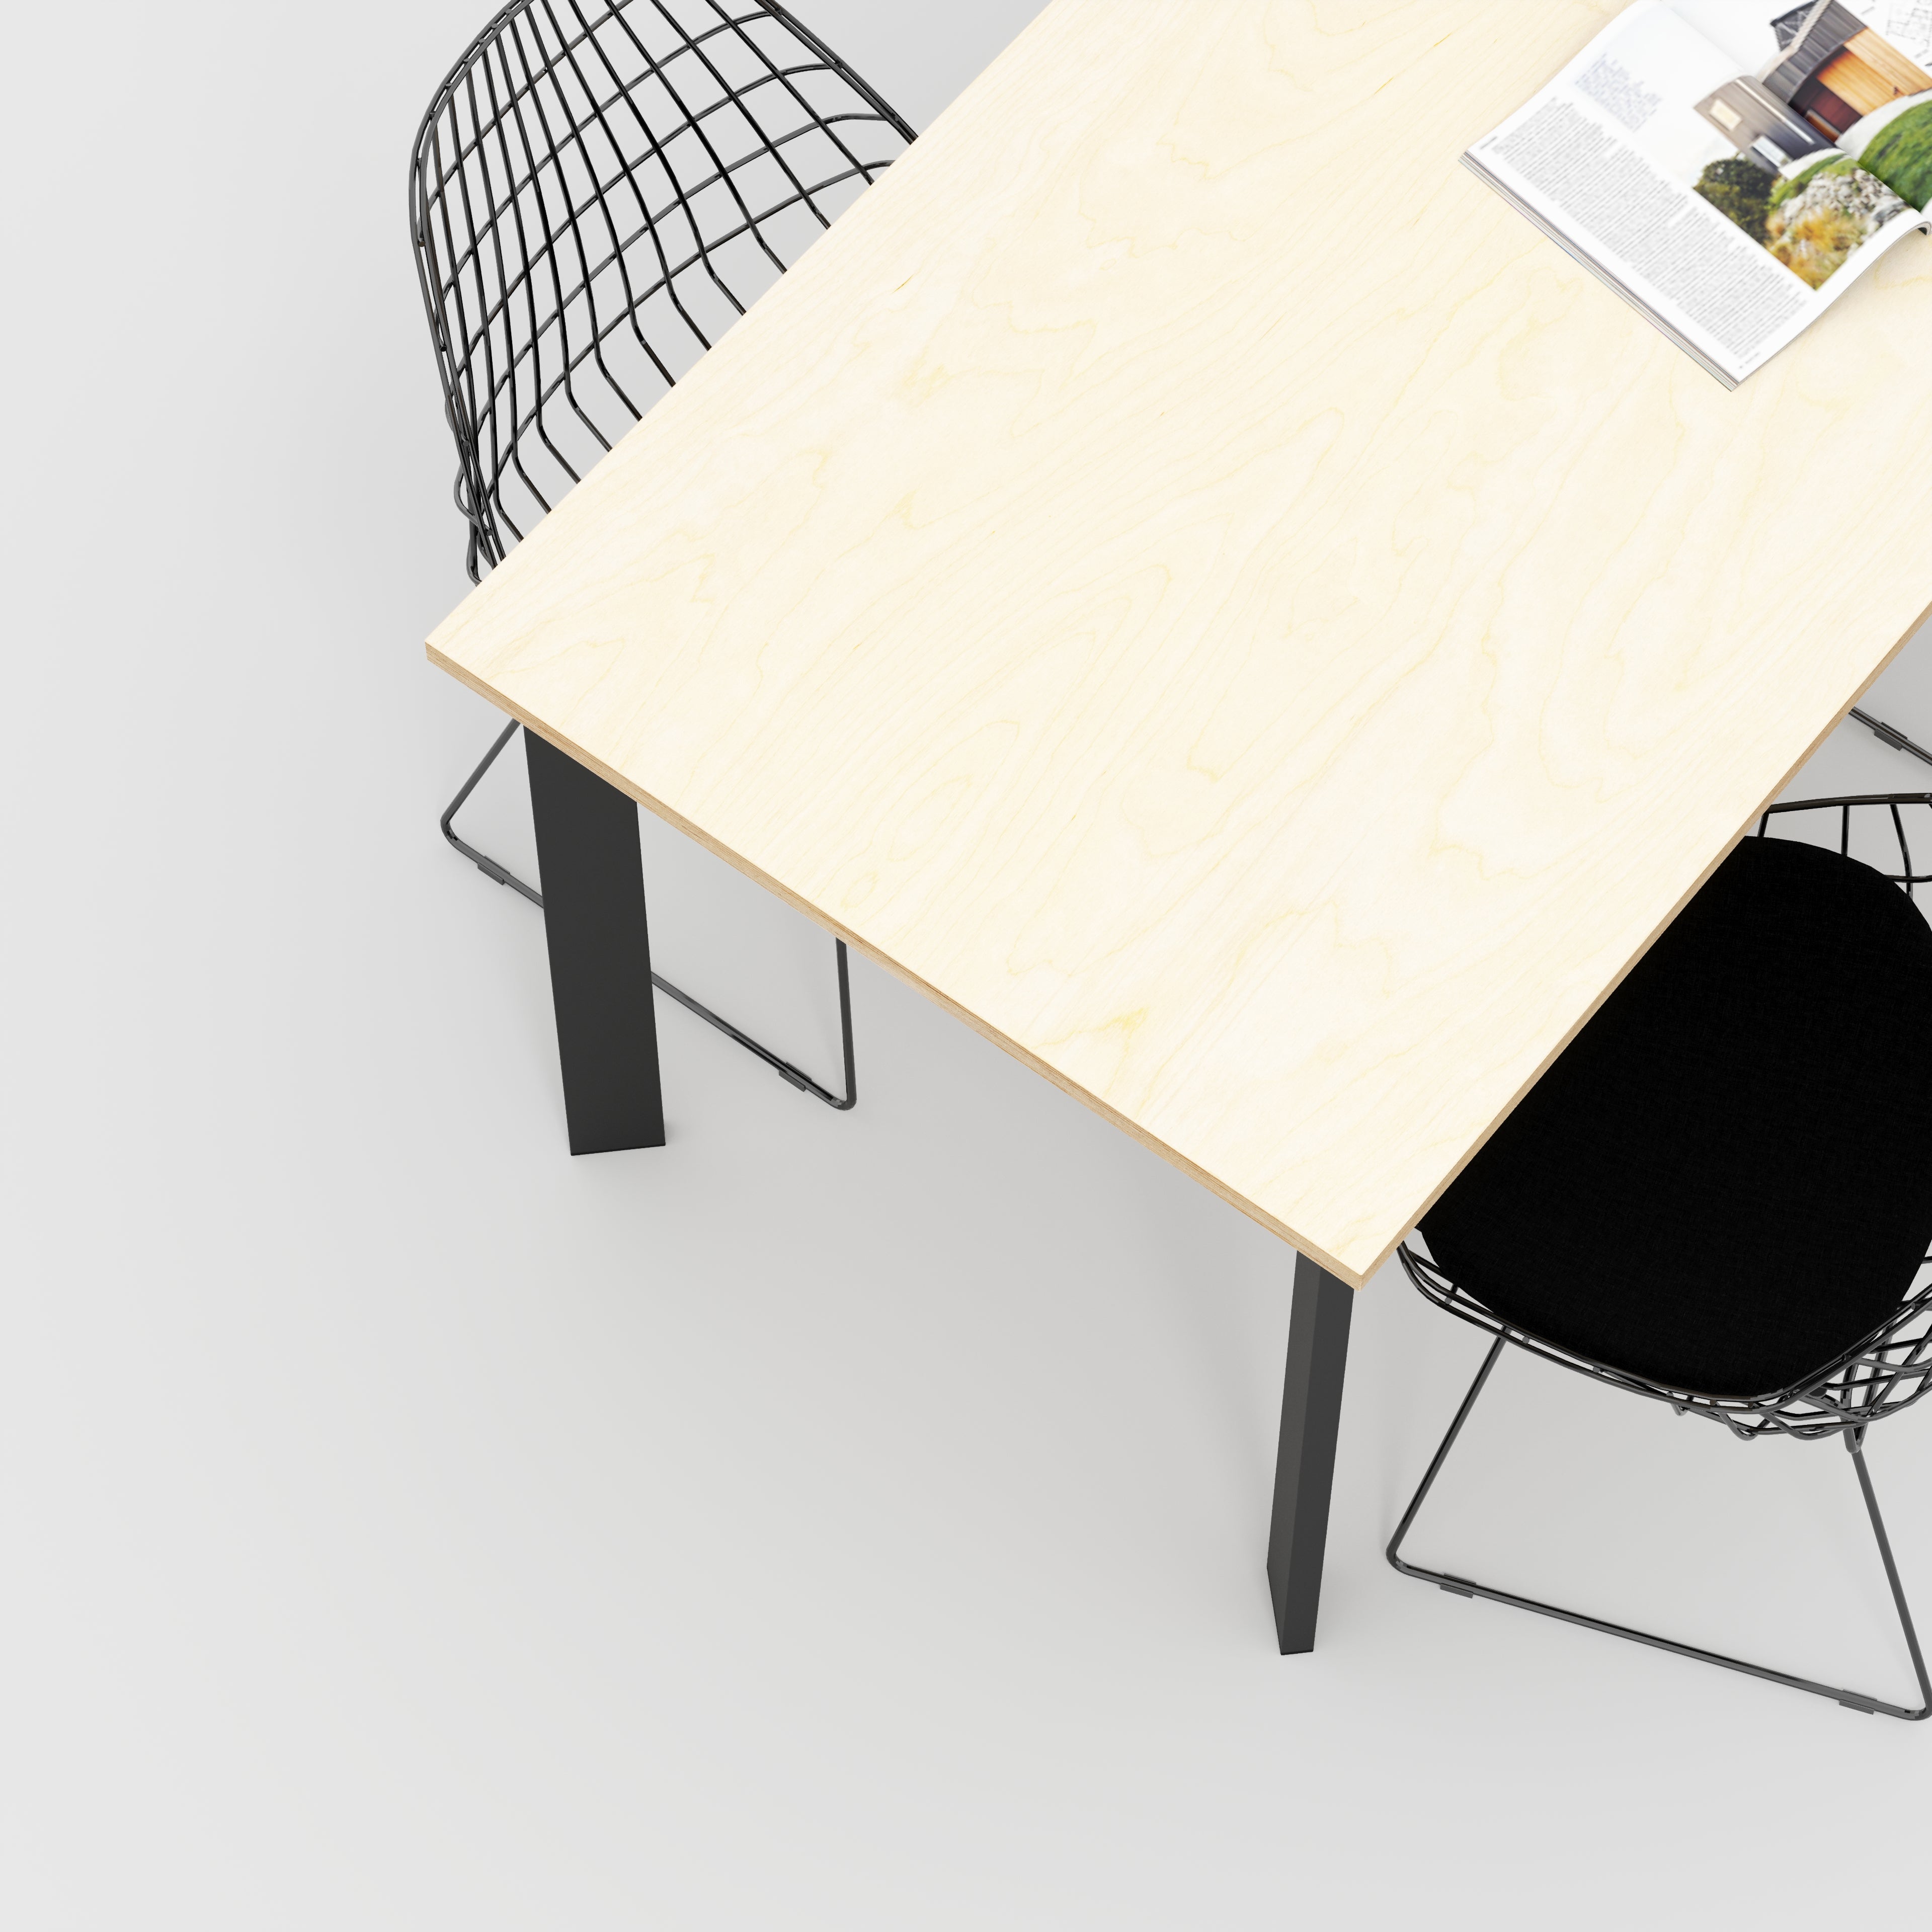 Custom Plywood Table with Rectangular Single Pin Legs